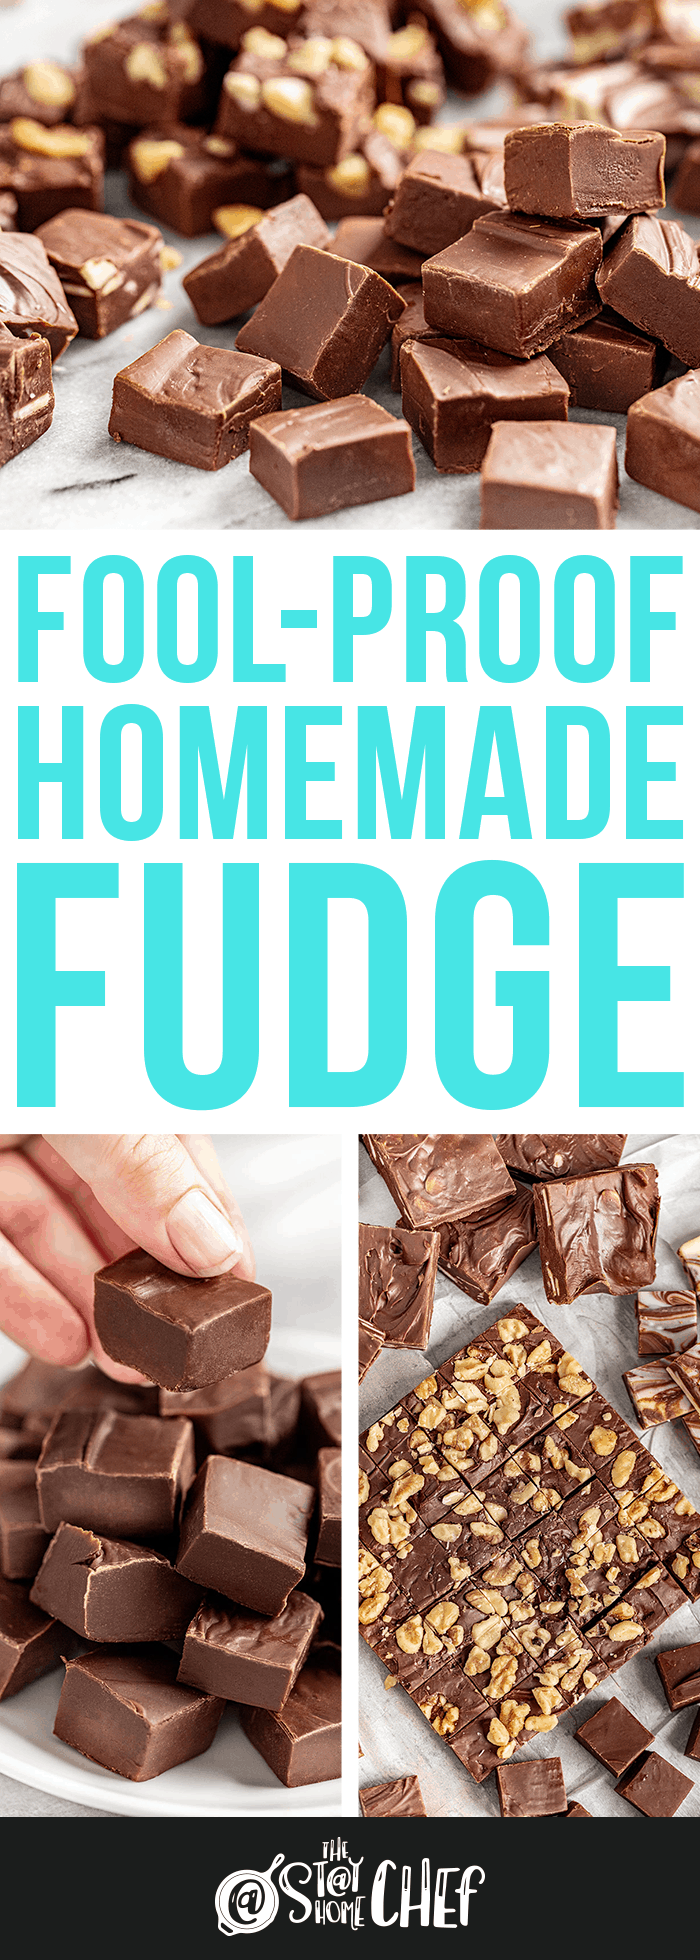 Fool-Proof Homemade Fudge